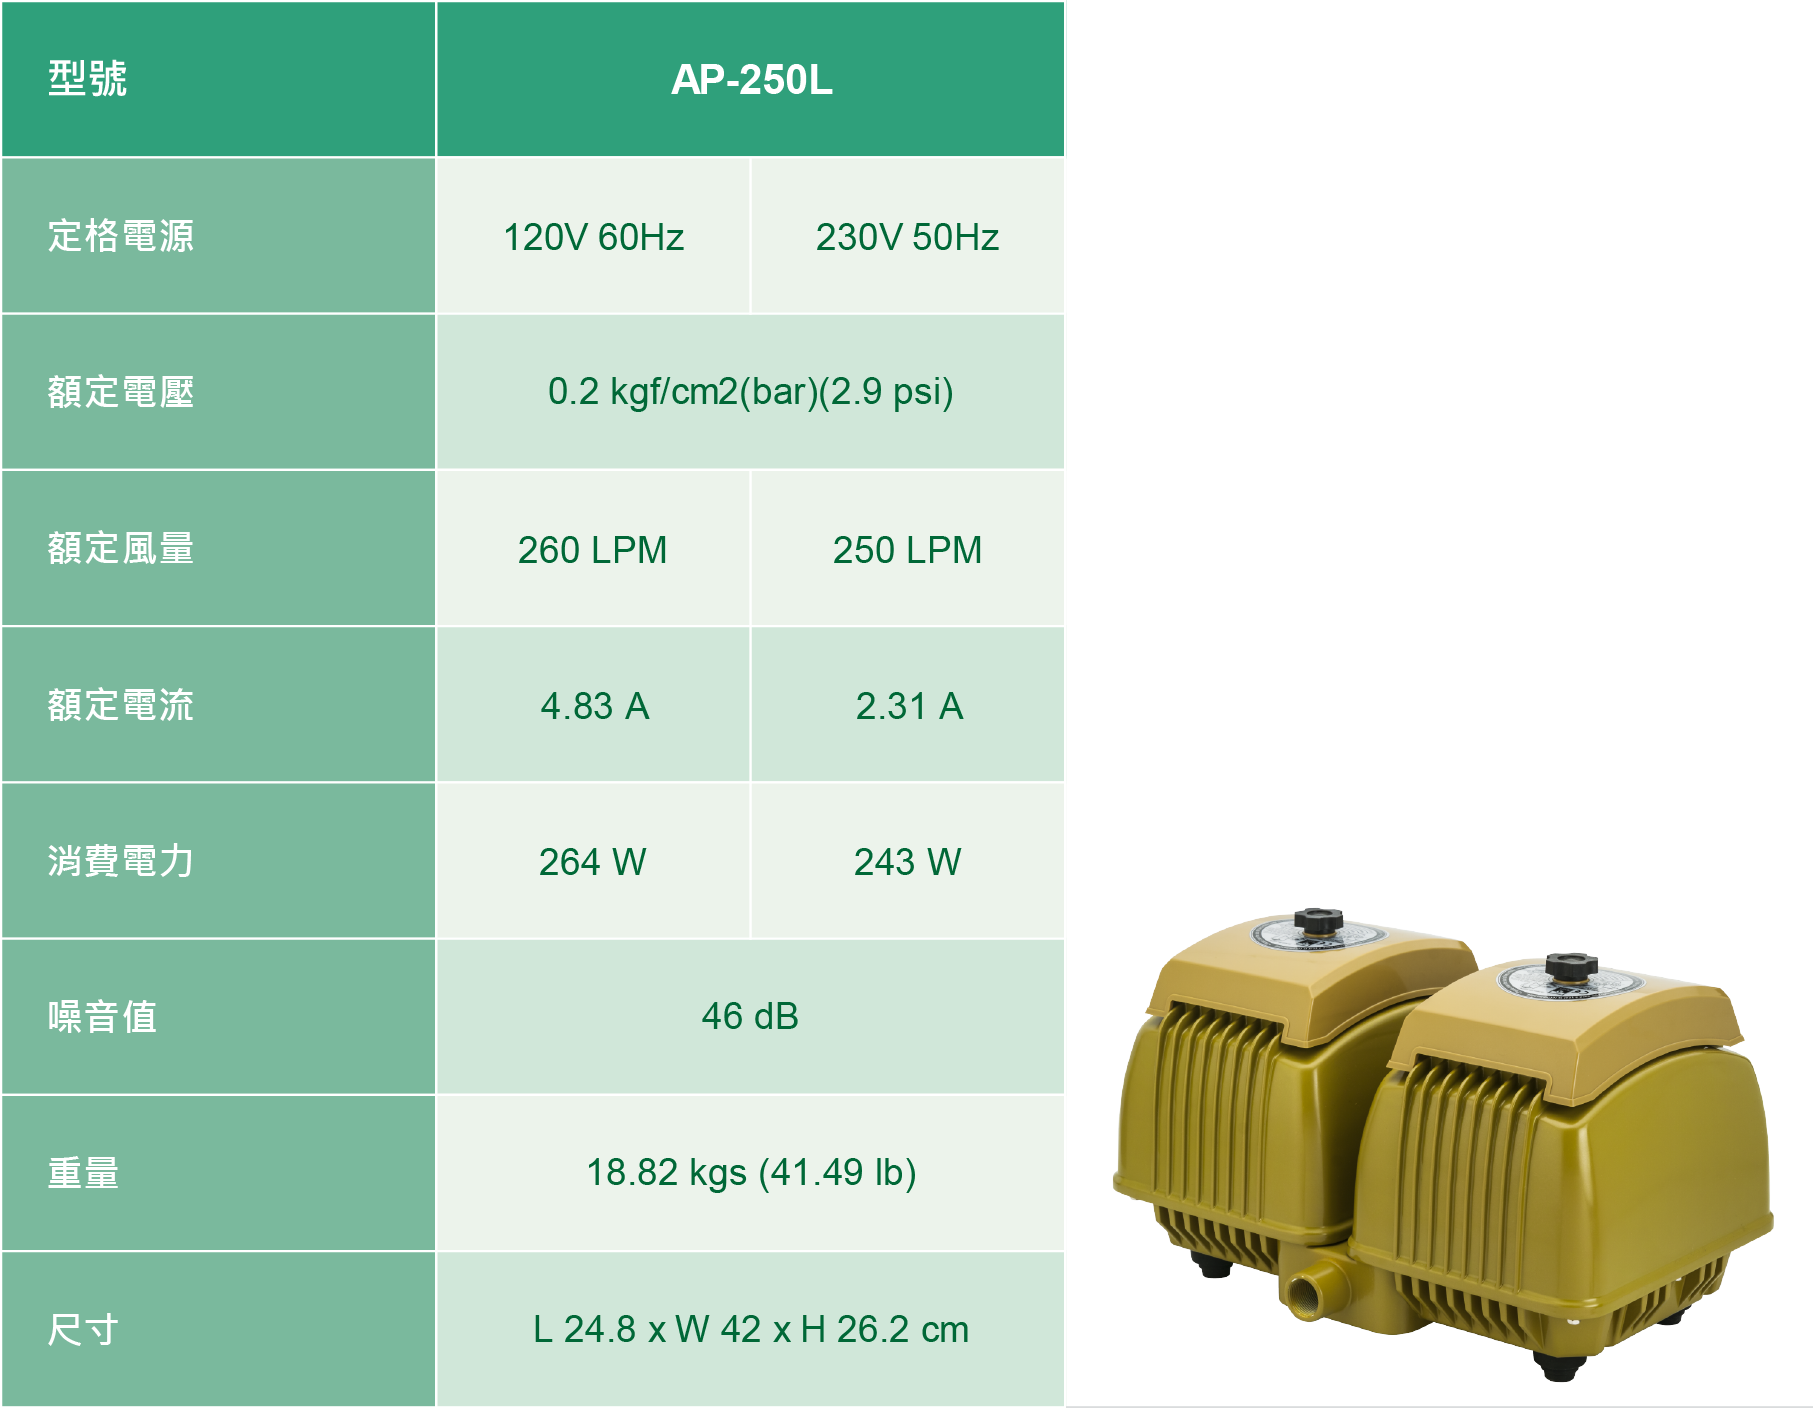 Linear Air Pumps AP-250L Performance